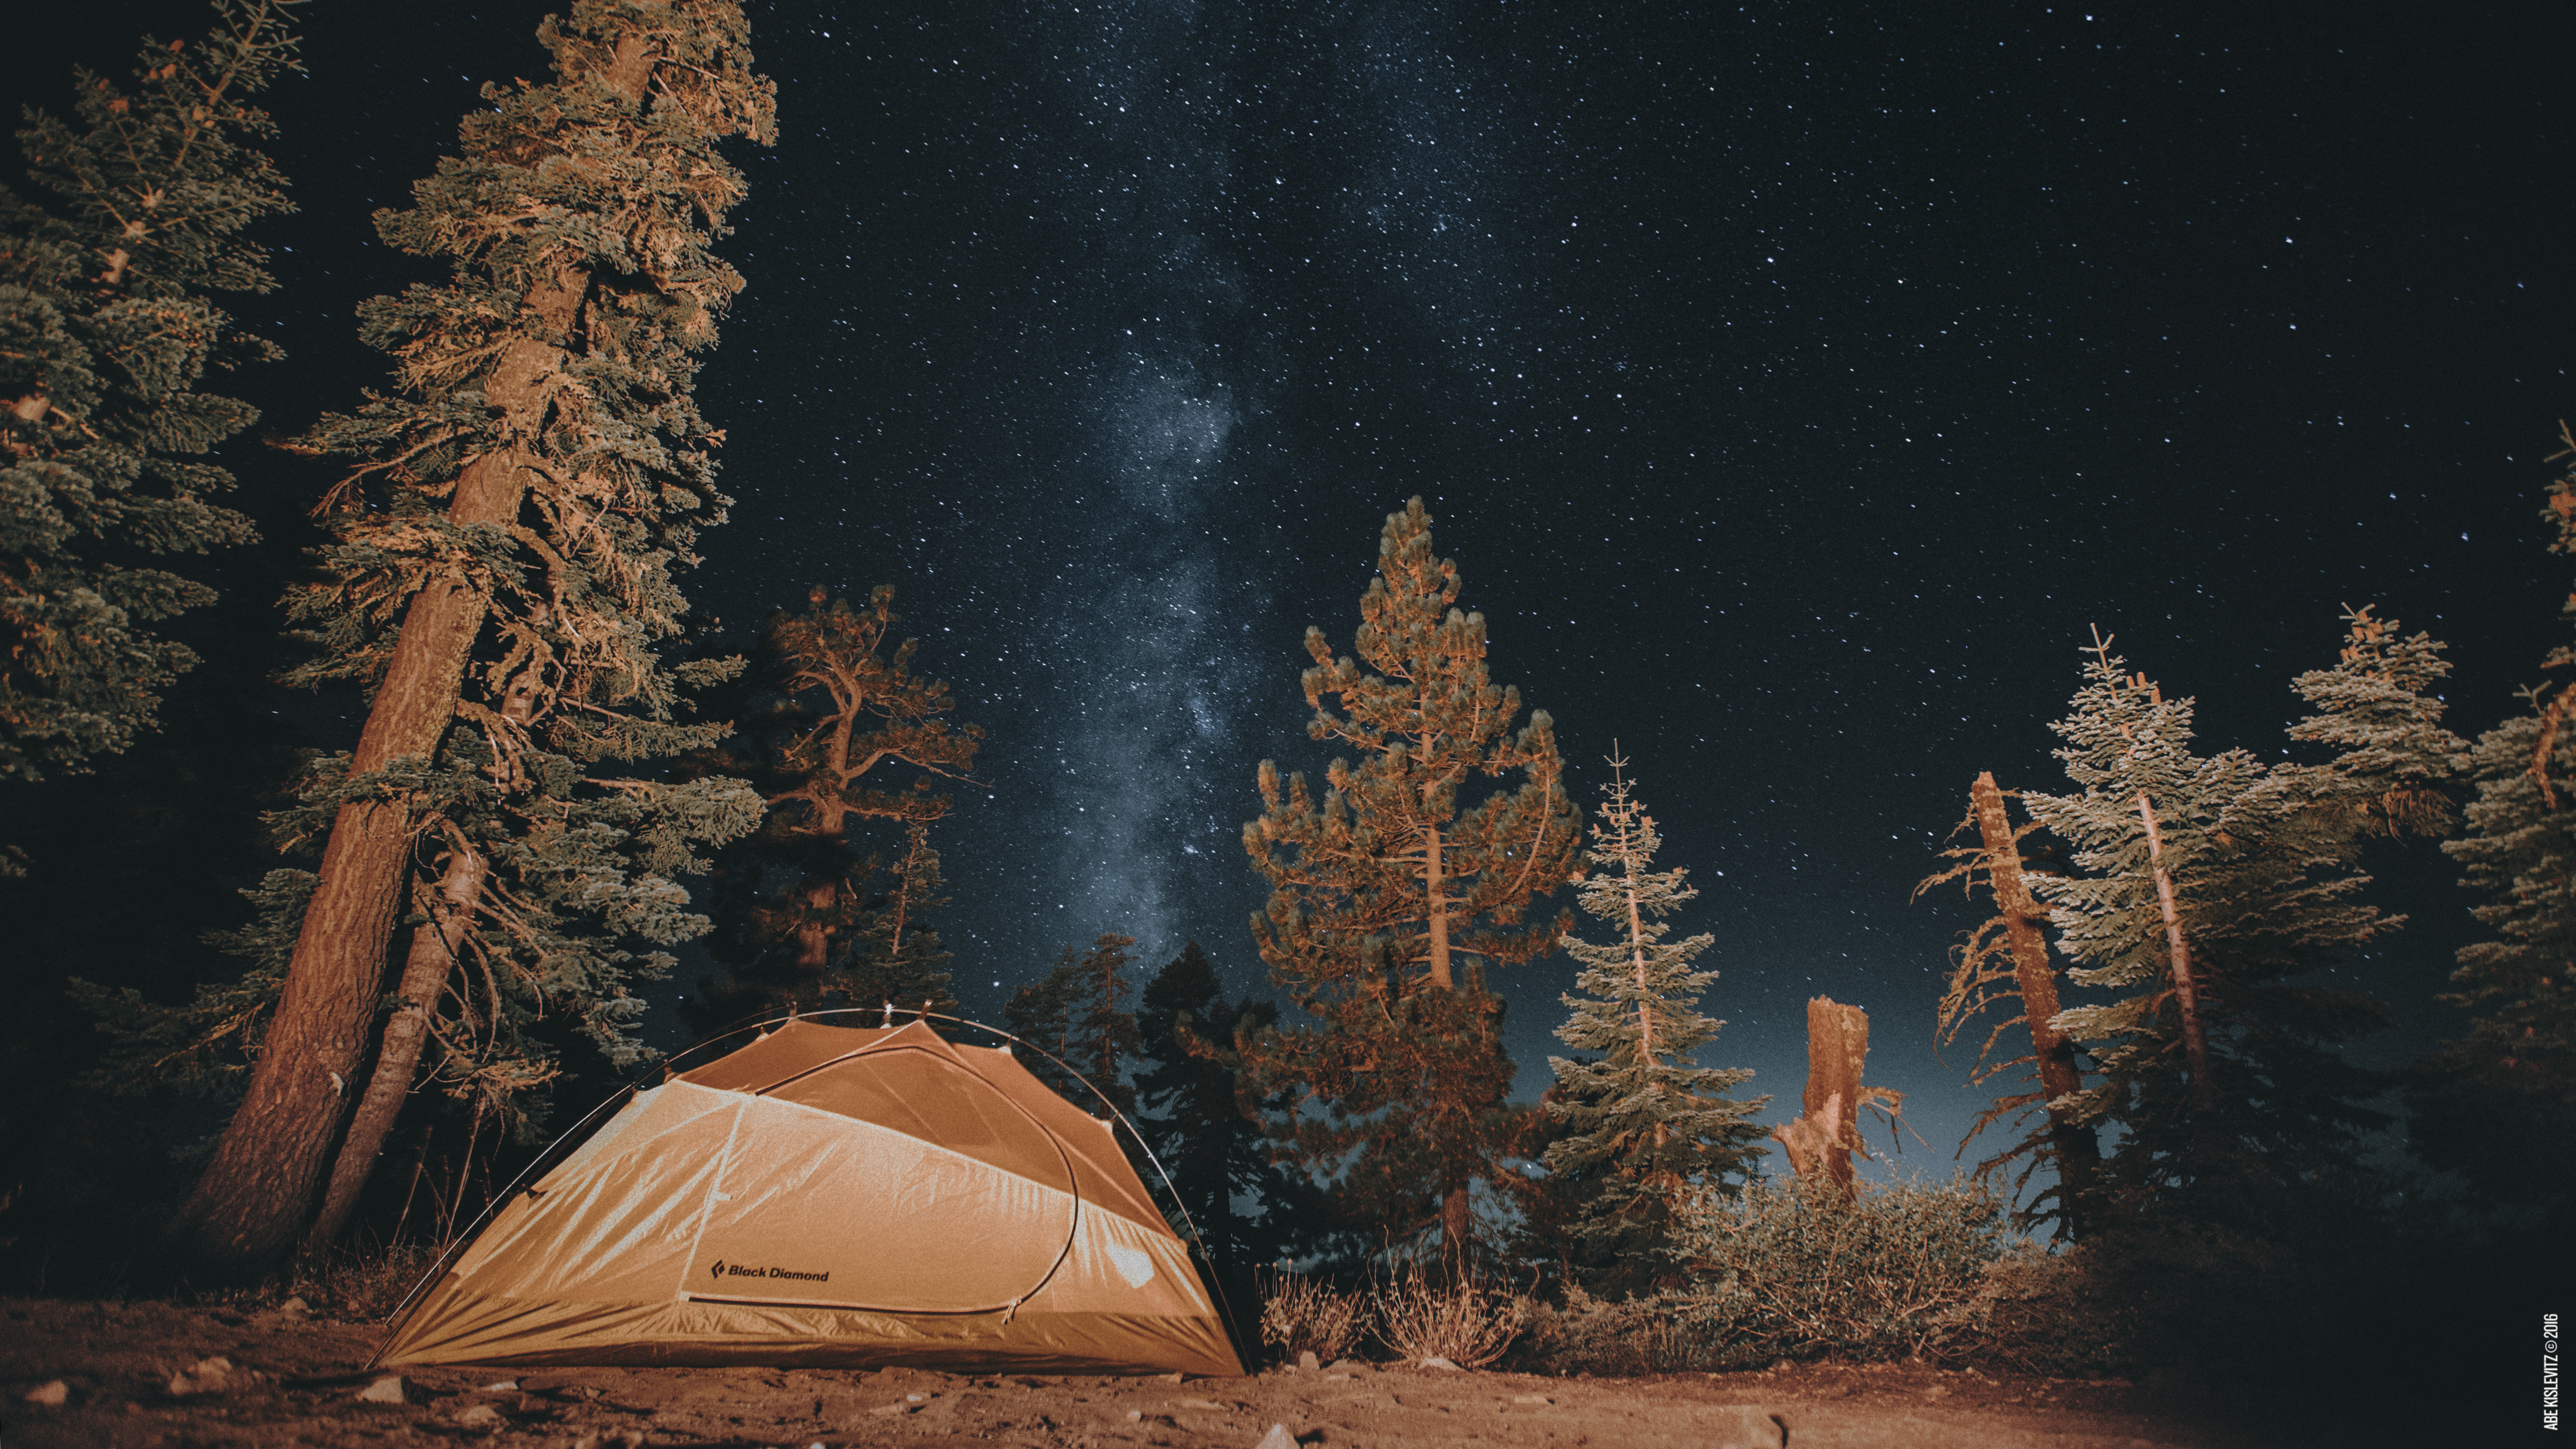 K k camping. Палатка в лесу. Палатка на природе ночью. Палатка в лесу ночью. Палатка в тайге ночью.